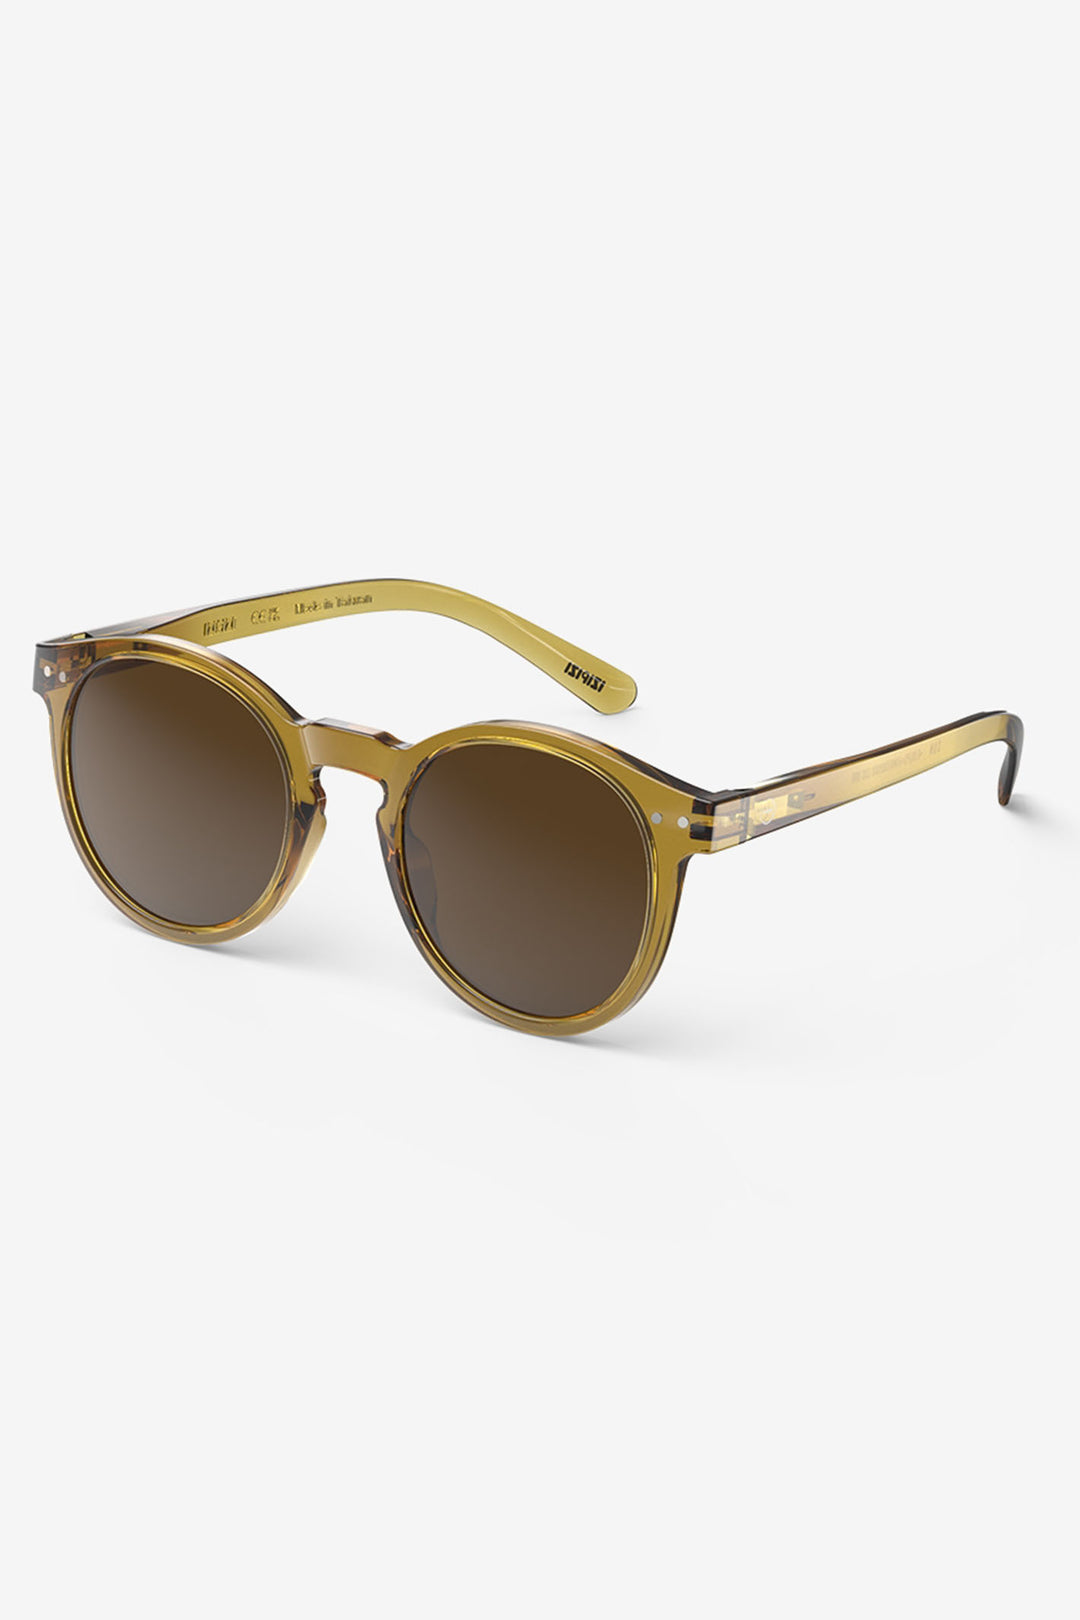 Izipizi Paris SLMSMC236 Golden Green Sunglasses - Olivia Grace Fashion